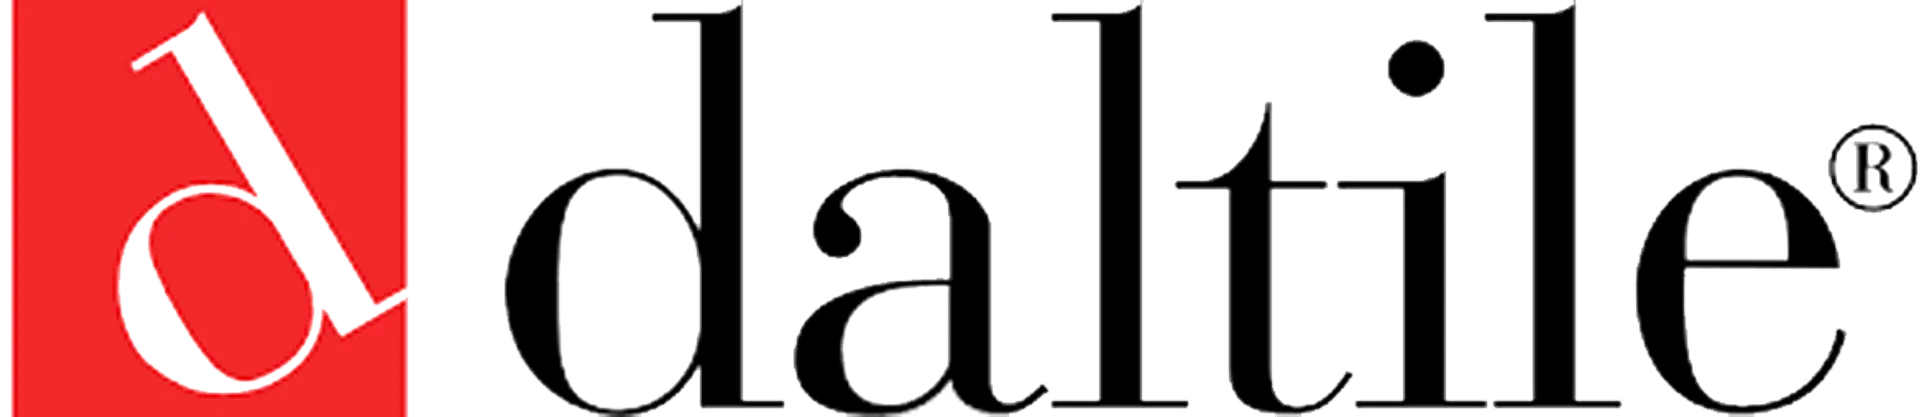 DALTILE logo